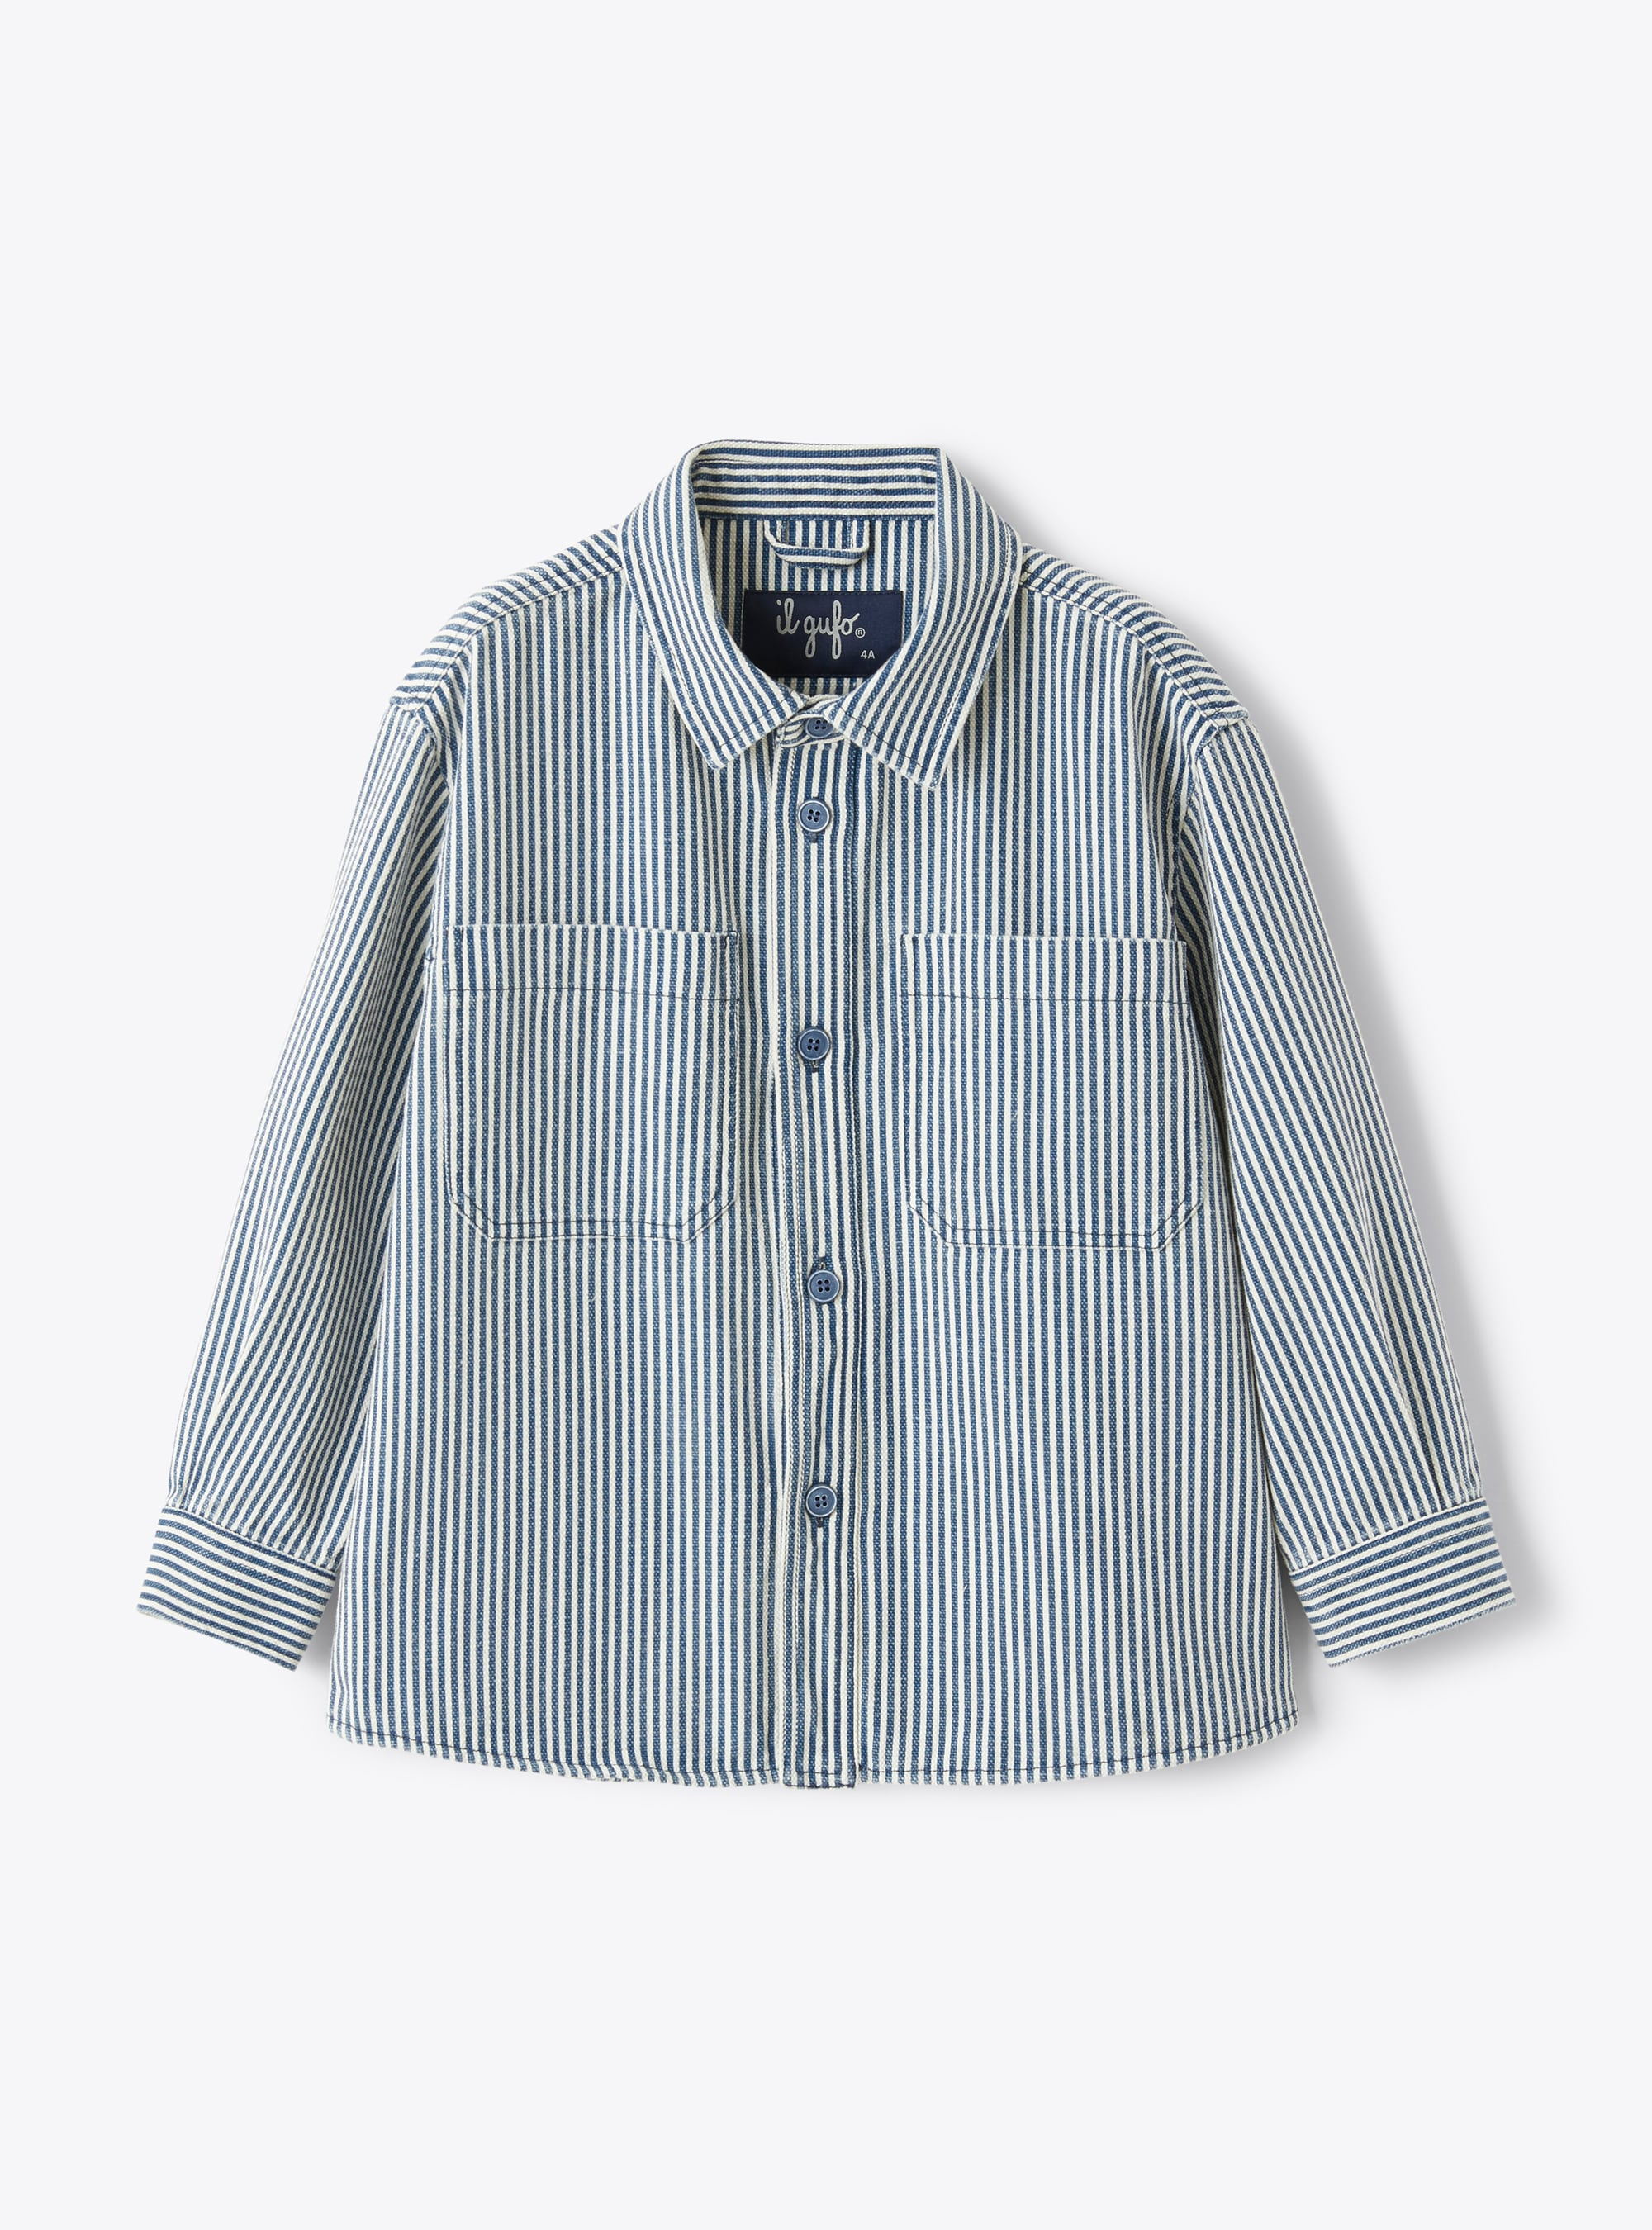 Work shirt in a stripe print - Jackets - Il Gufo